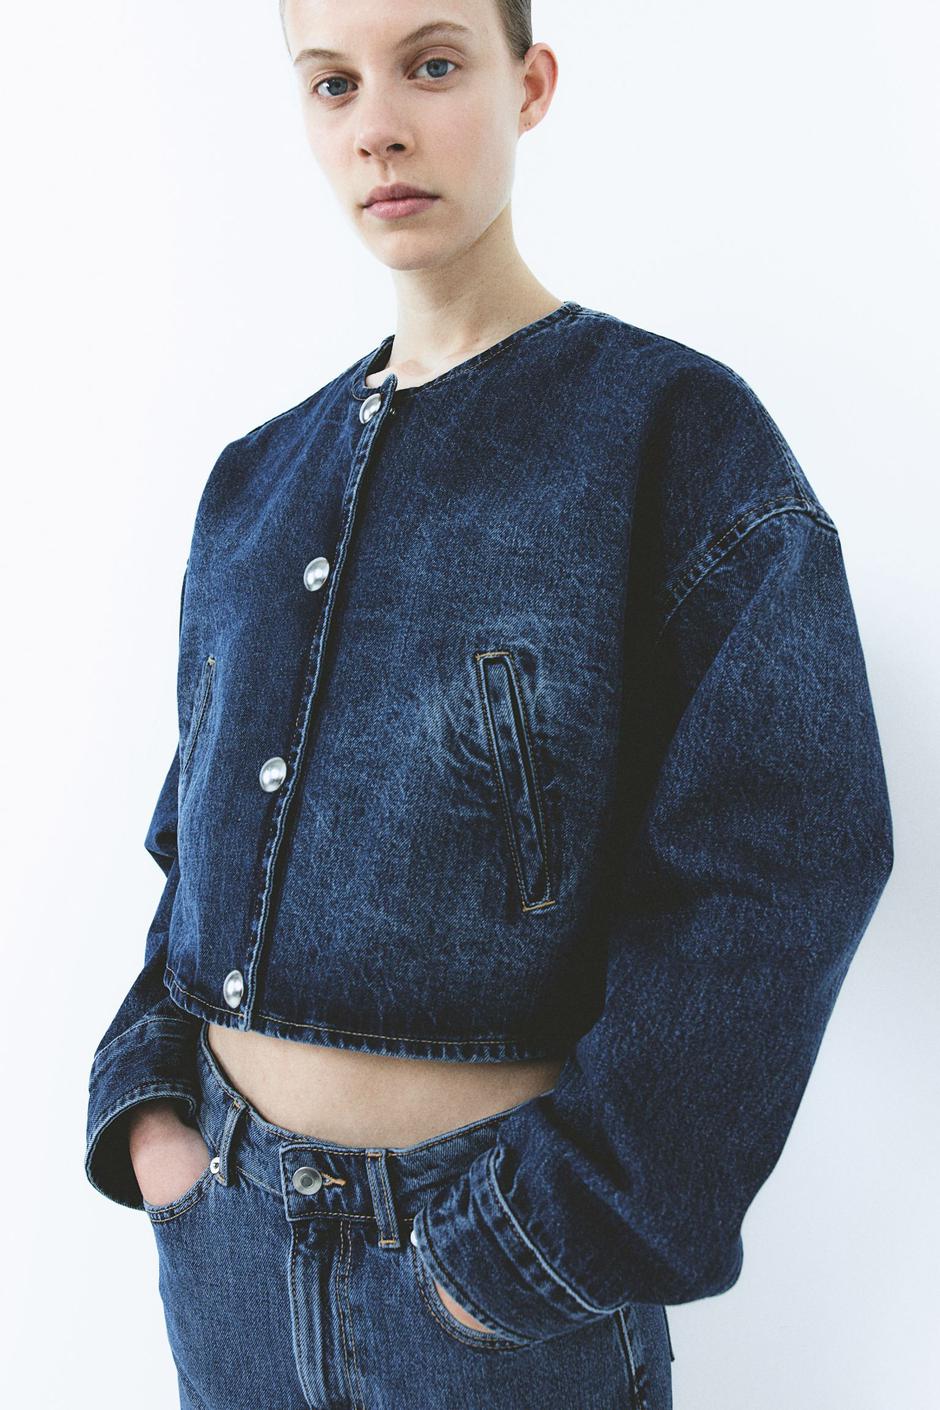 Foto: H&M, jakna- kardigan u jeans materijalu | Autor: H&M